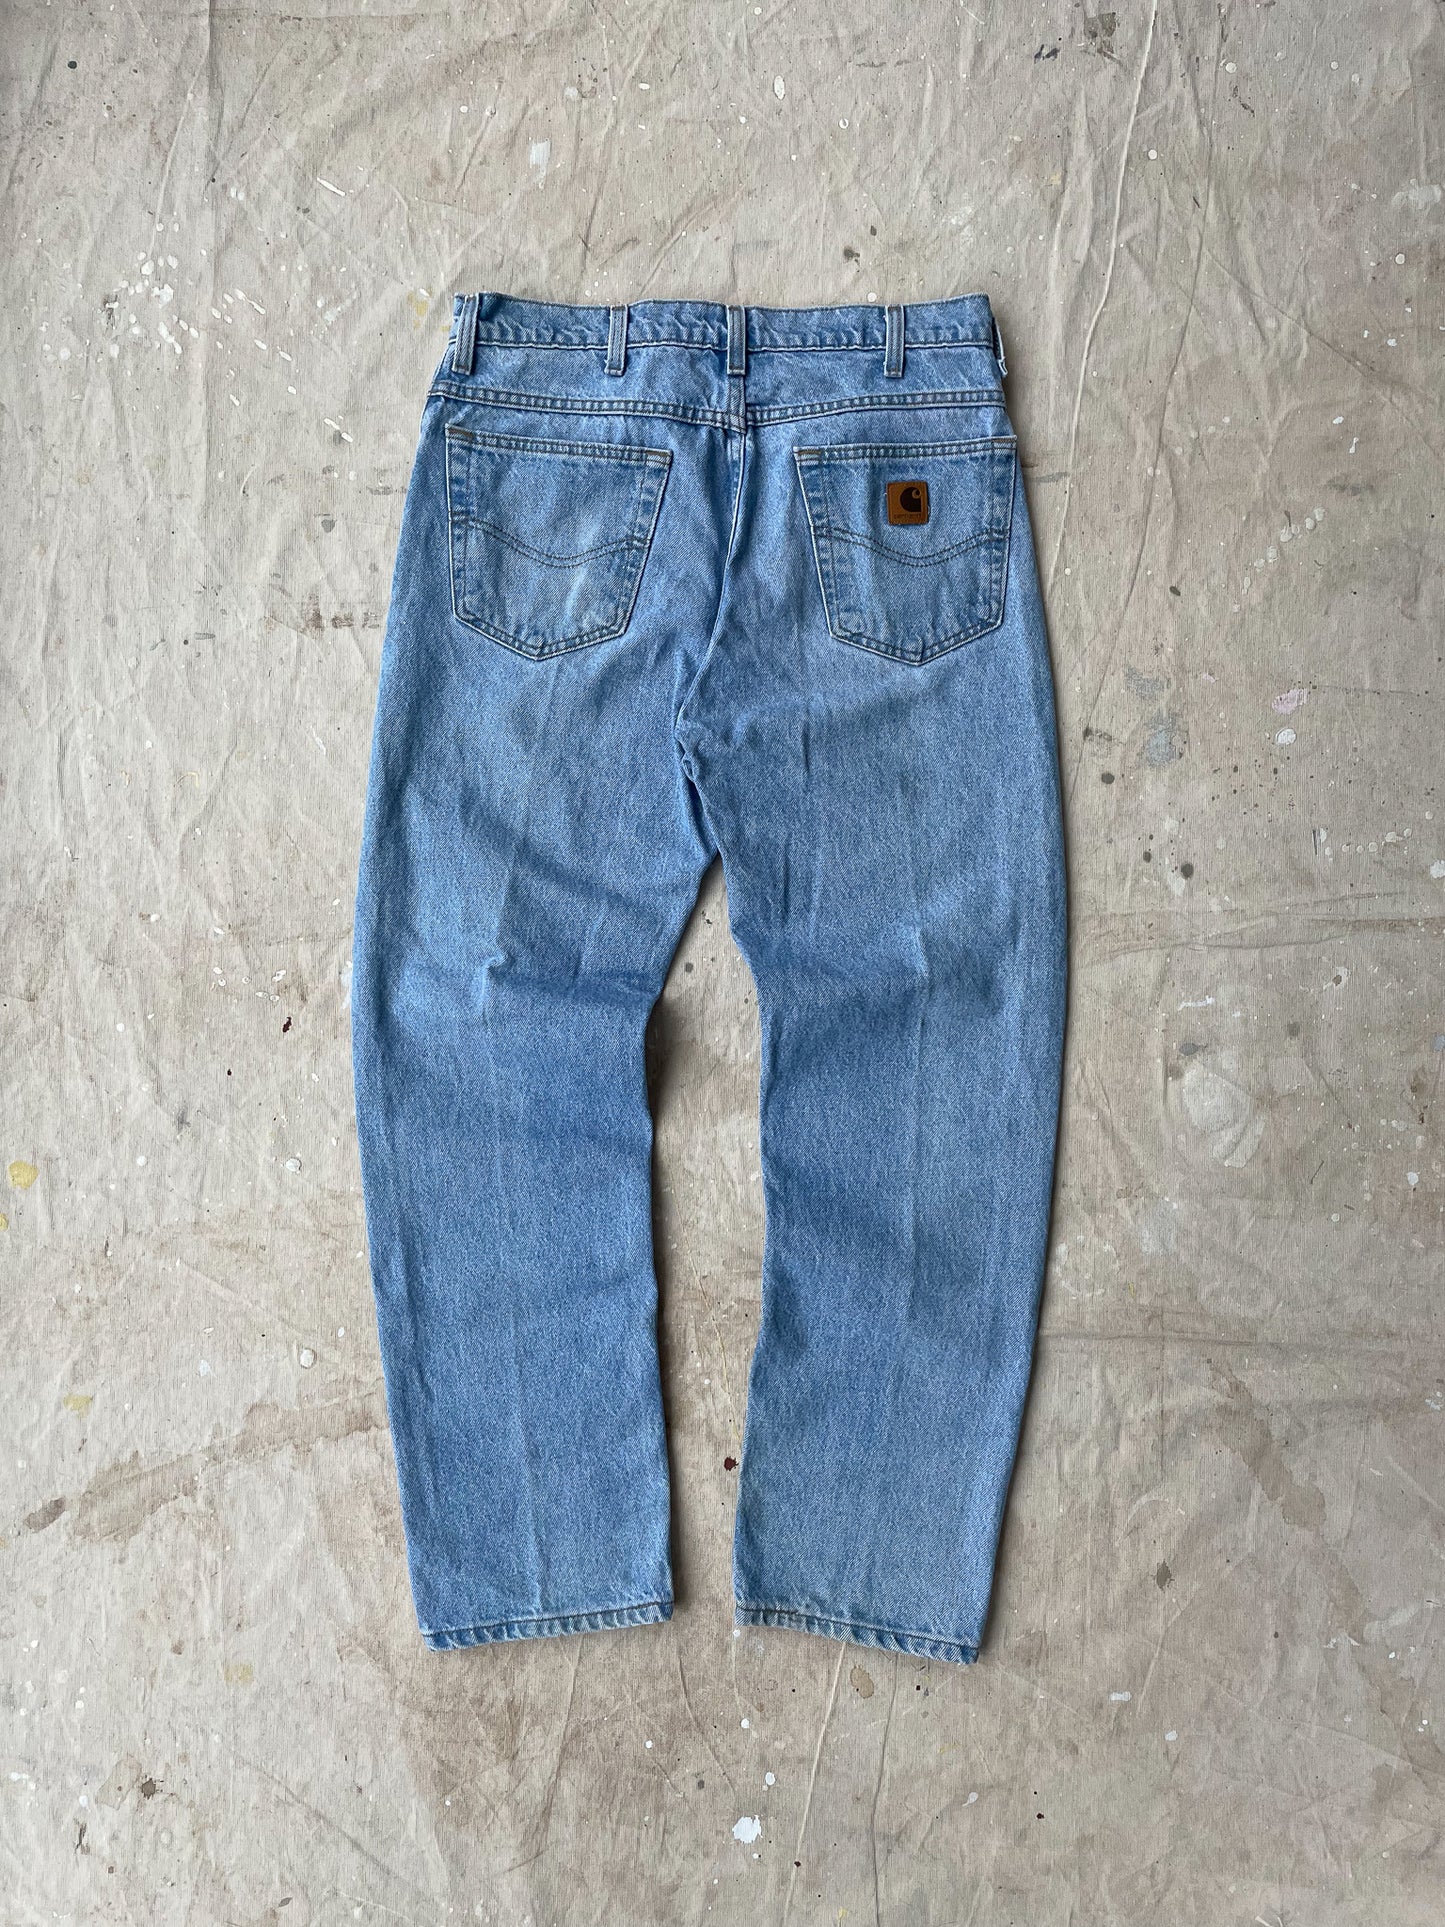 Carhartt Light Wash Blue Jeans—[34X30]